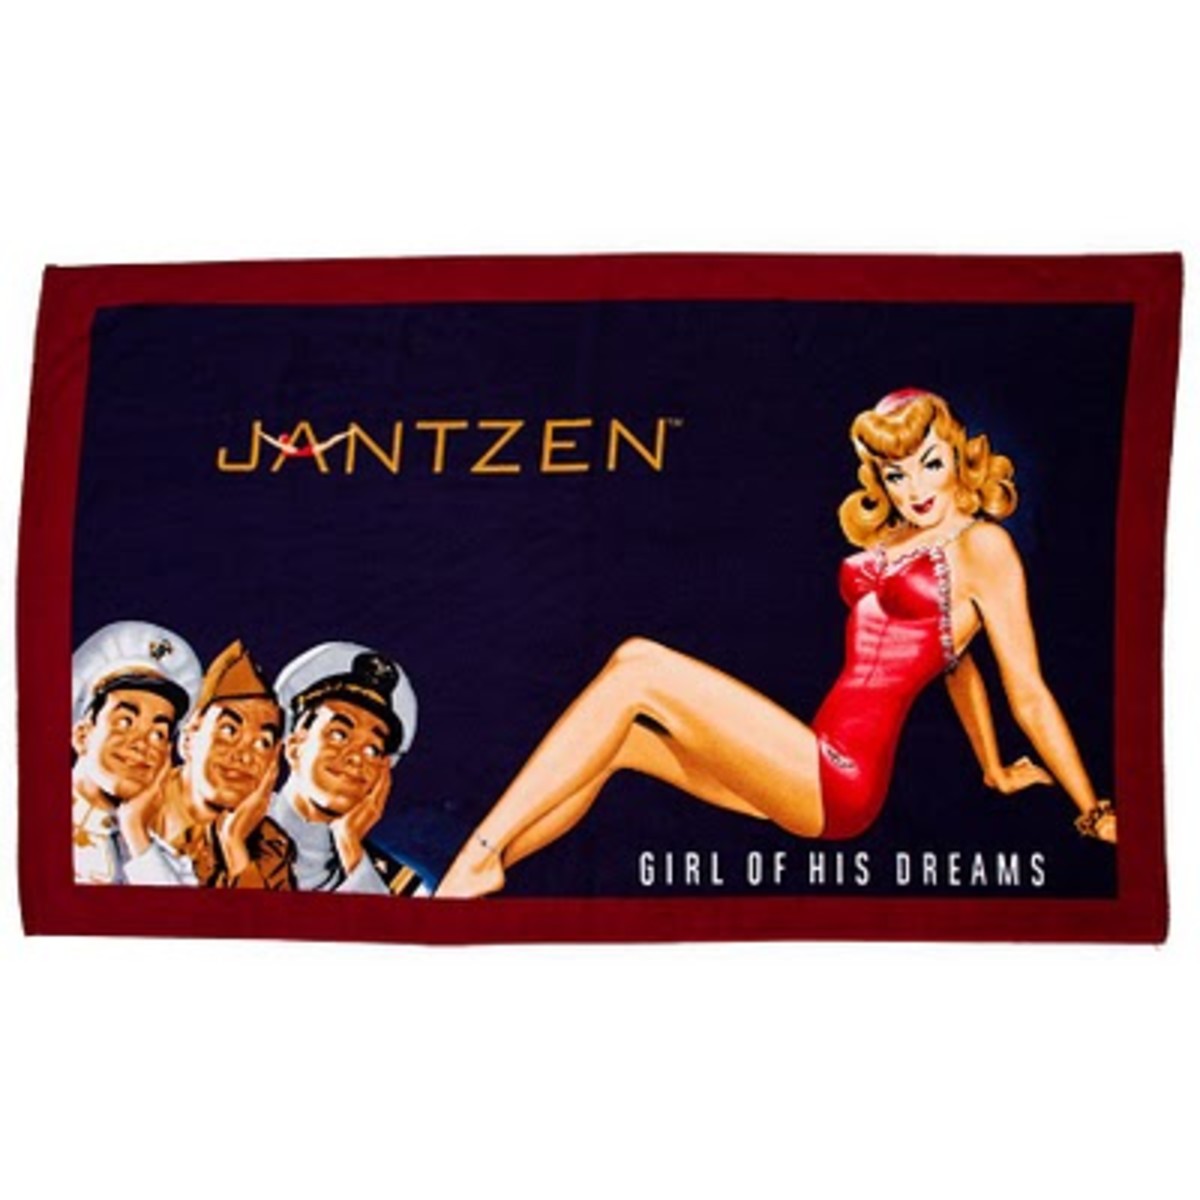 Distinctive Jantzen Swim Suit Advertisements on Black Background